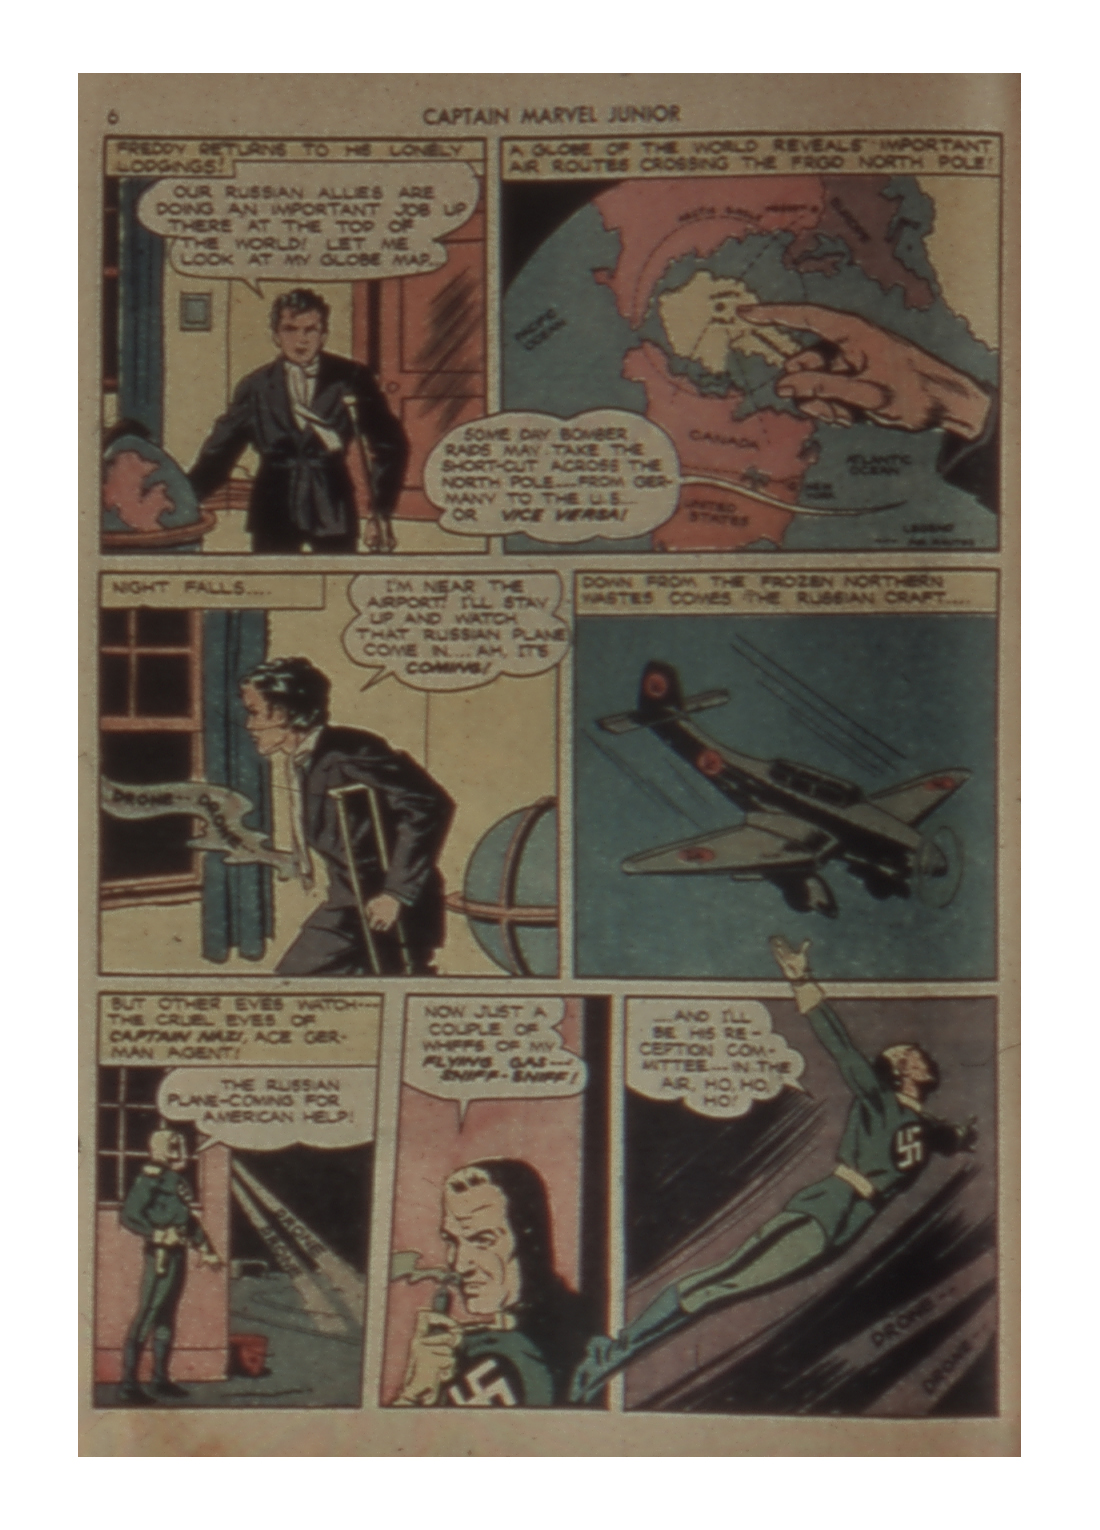 Read online Captain Marvel, Jr. comic -  Issue #5 - 6